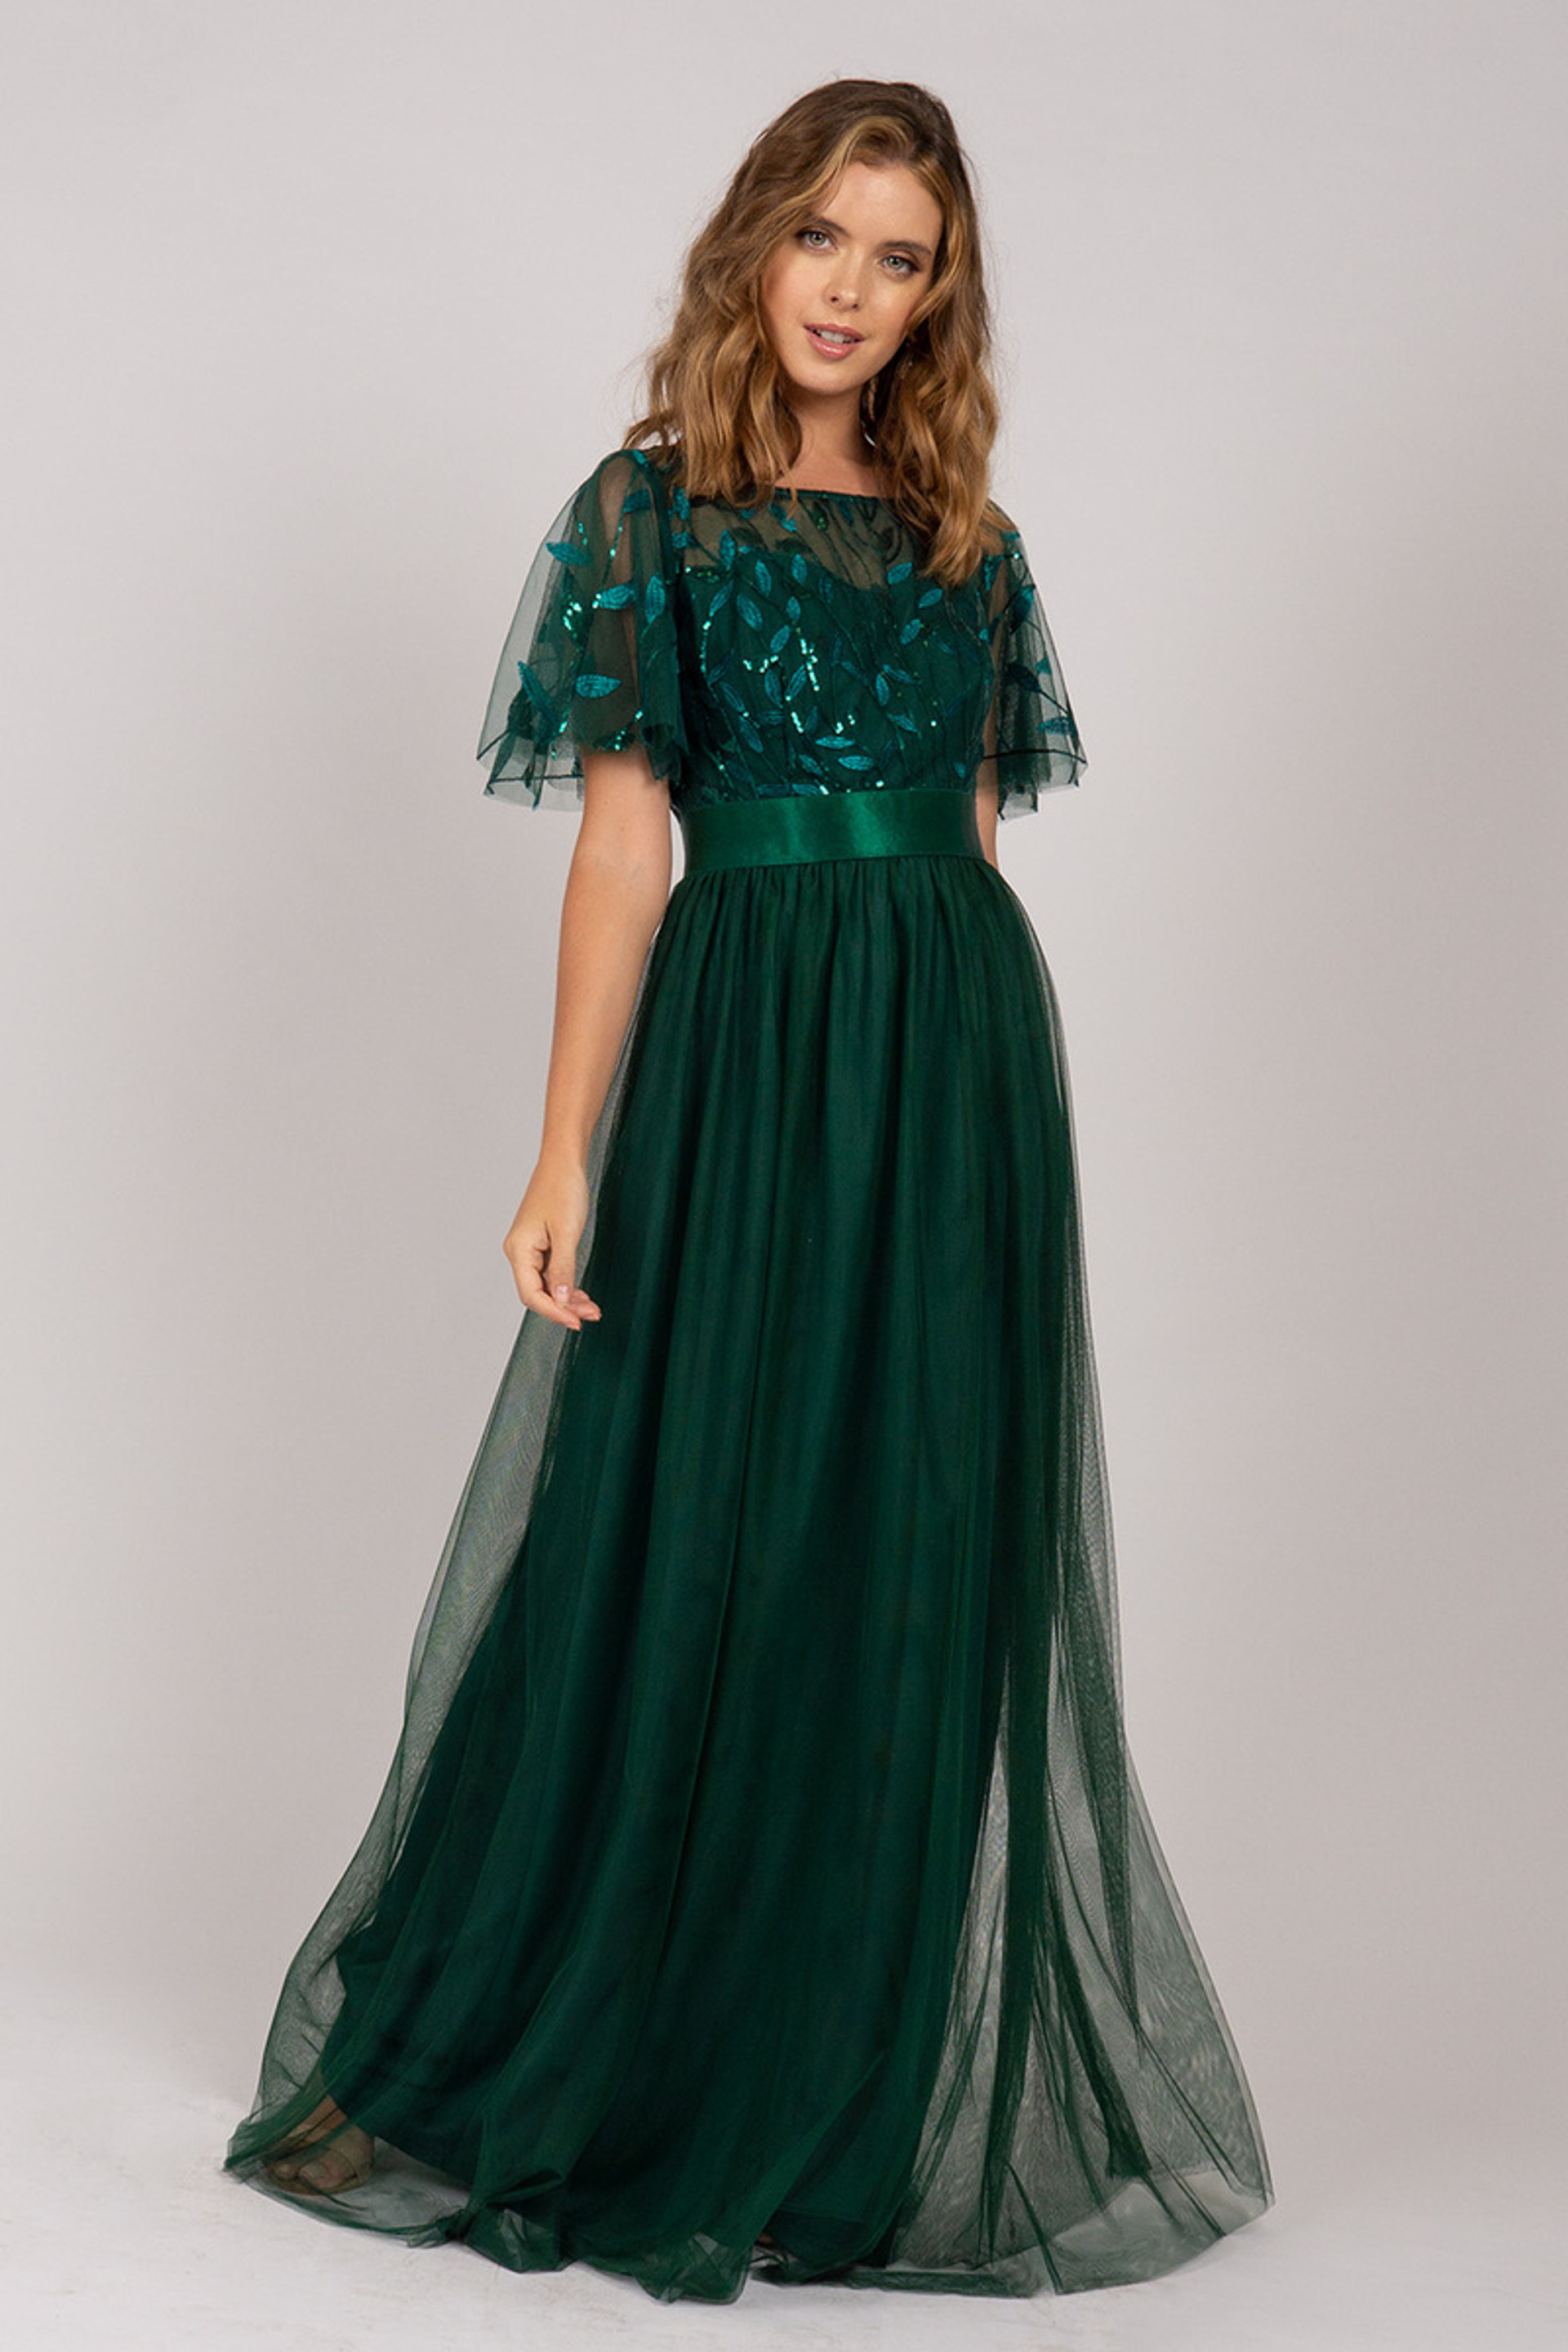 Shop the Charli Sequins Velvet Formal Dress in Emerald Green - Formal ...